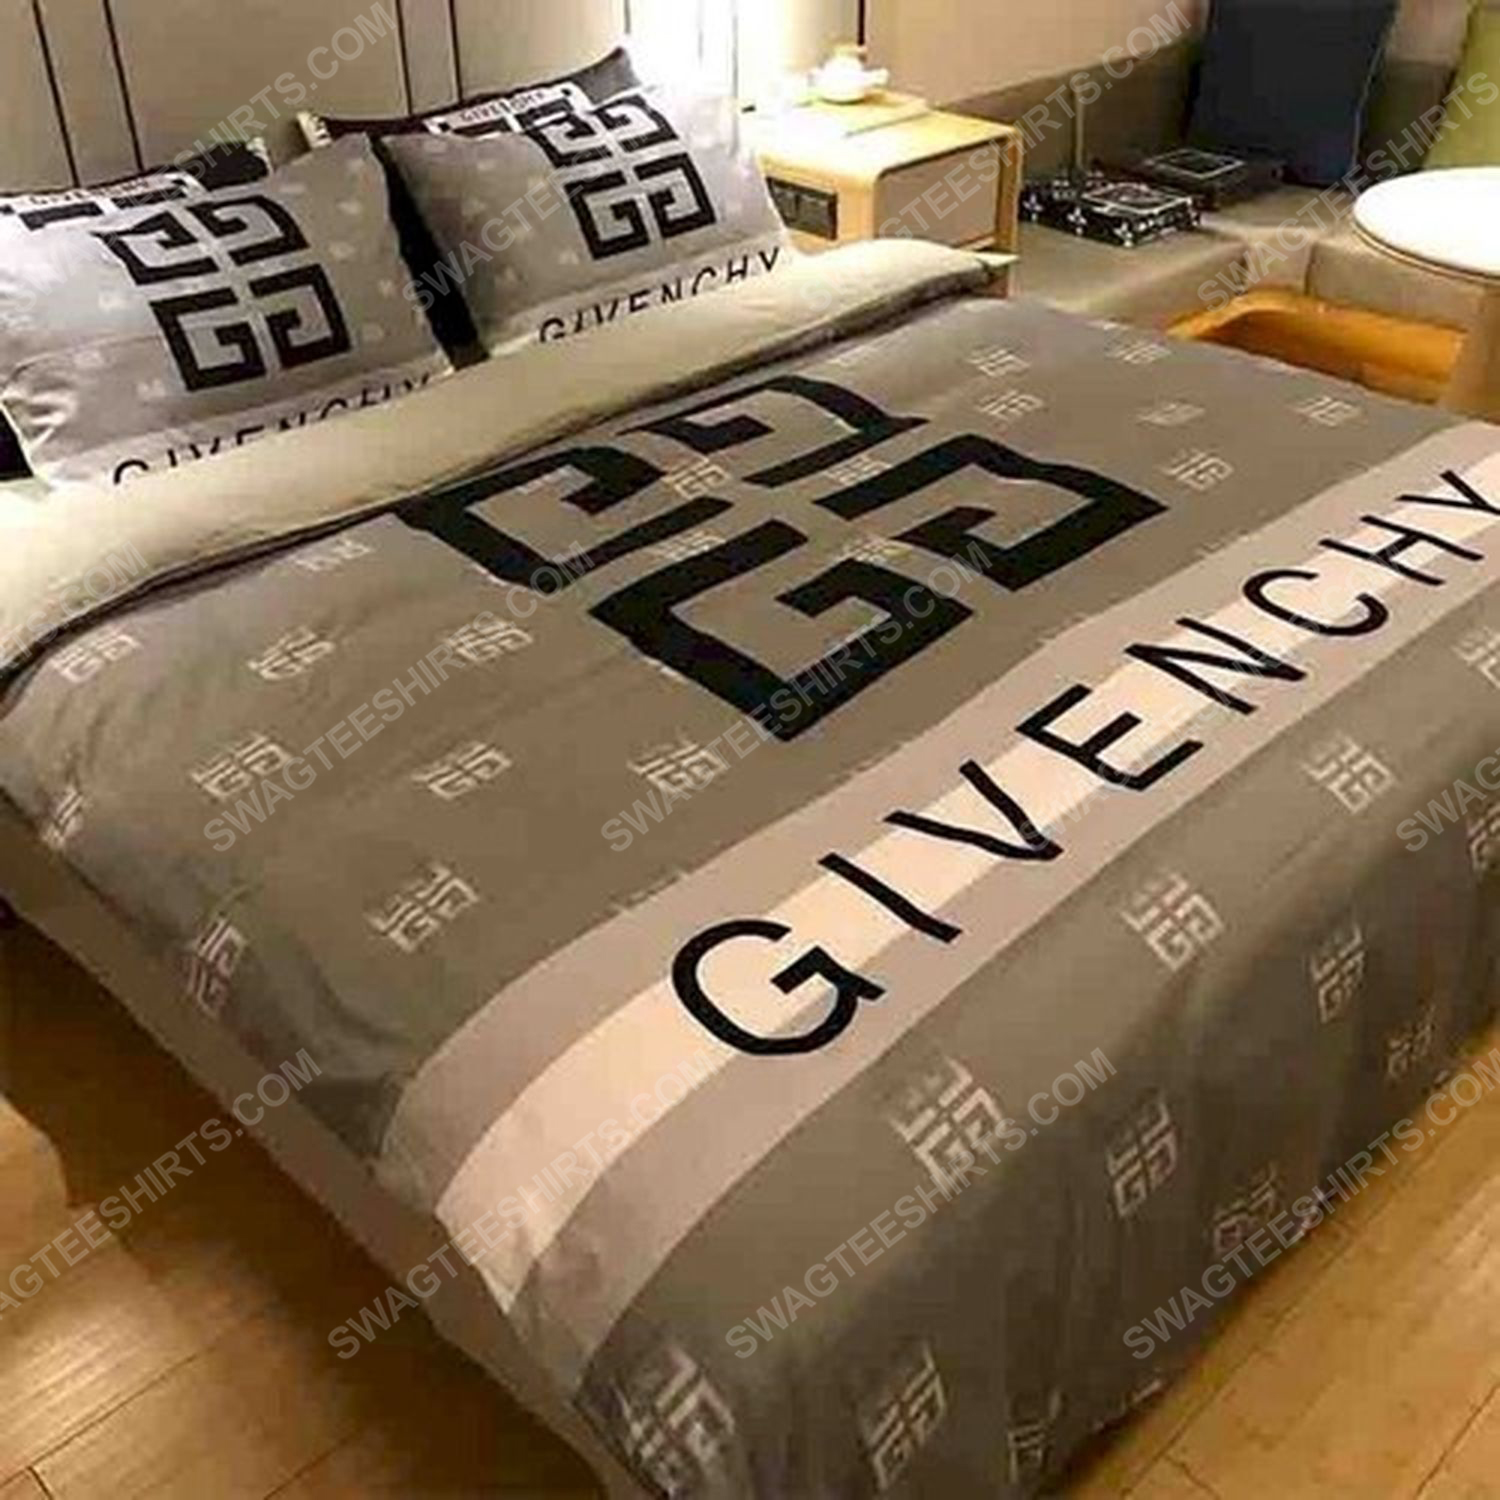 [special edition] Givenchy monogram symbols full print duvet cover bedding set – maria